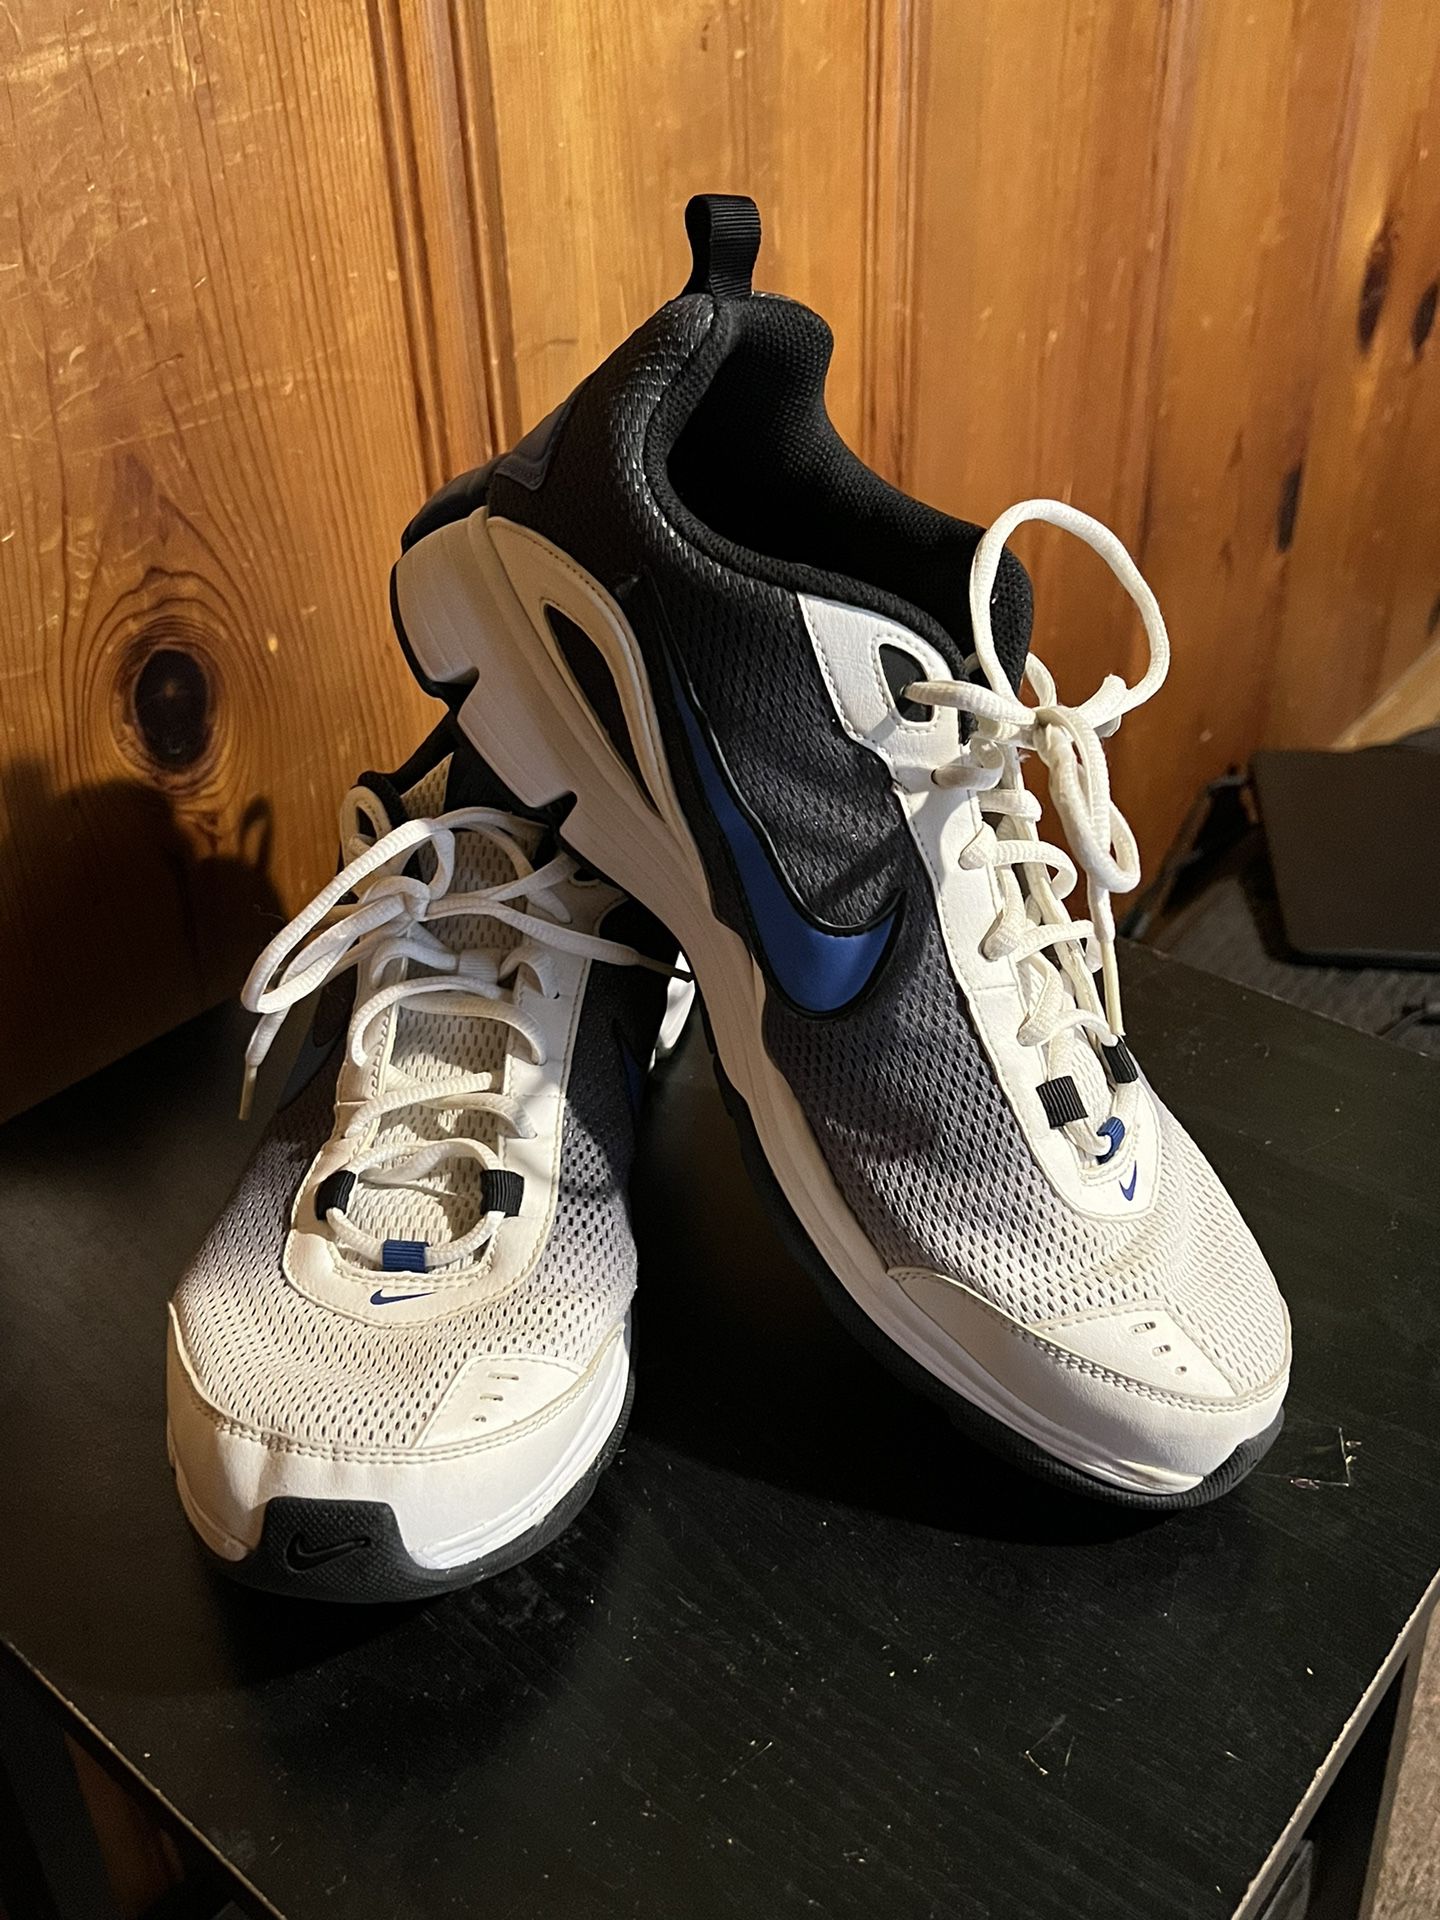 Nike brand men's tennis shoes size 11